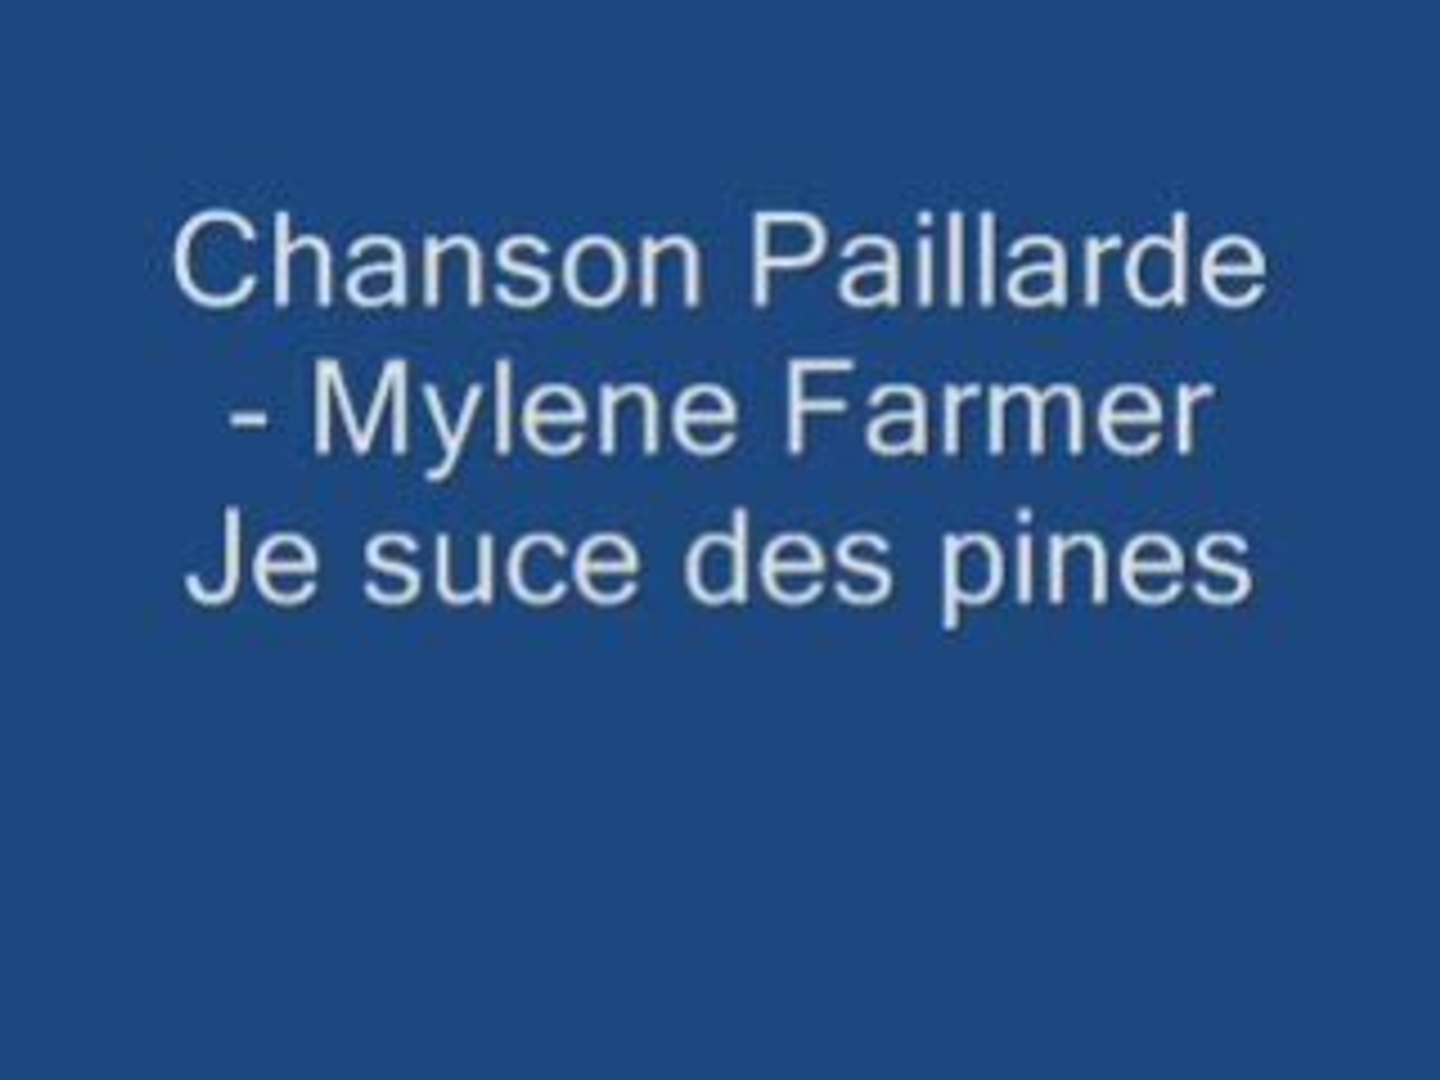 Chanson Paillarde - Mylene Farmer Je suce des pines - Vidéo Dailymotion